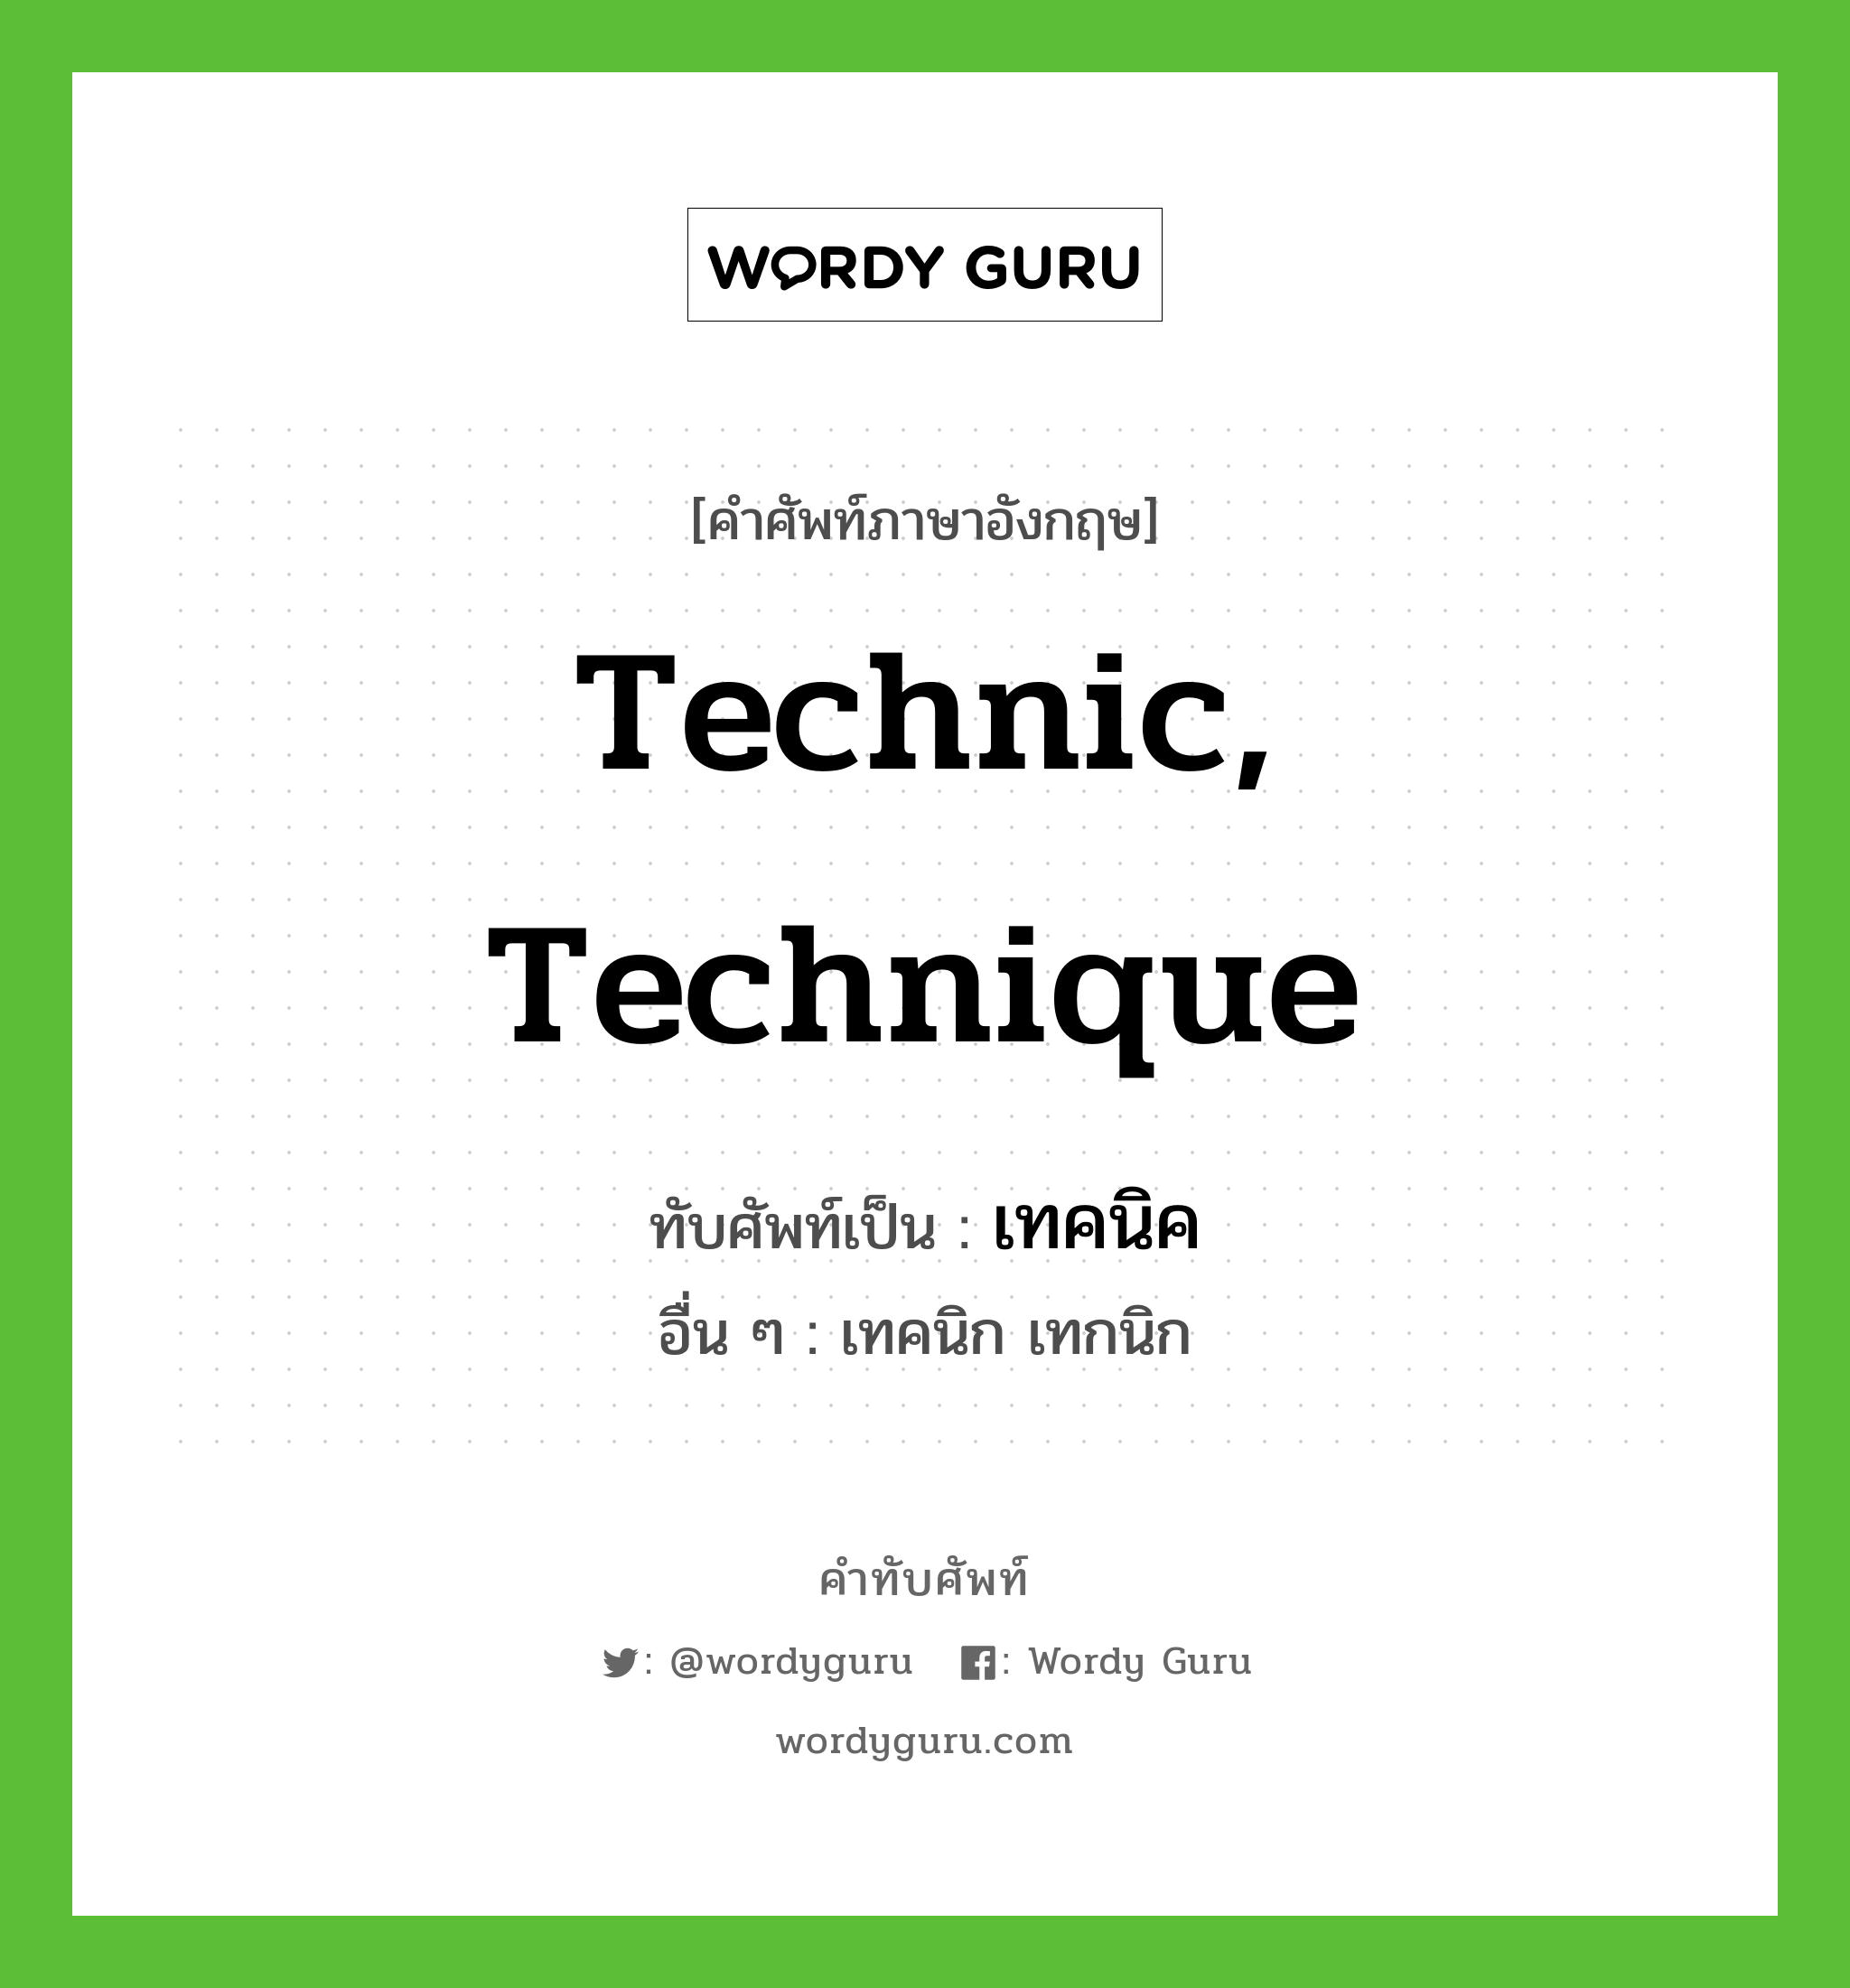 technic, technique เขียนเป็นคำไทยว่าอะไร?, คำศัพท์ภาษาอังกฤษ technic, technique ทับศัพท์เป็น เทคนิค อื่น ๆ เทคนิก เทกนิก